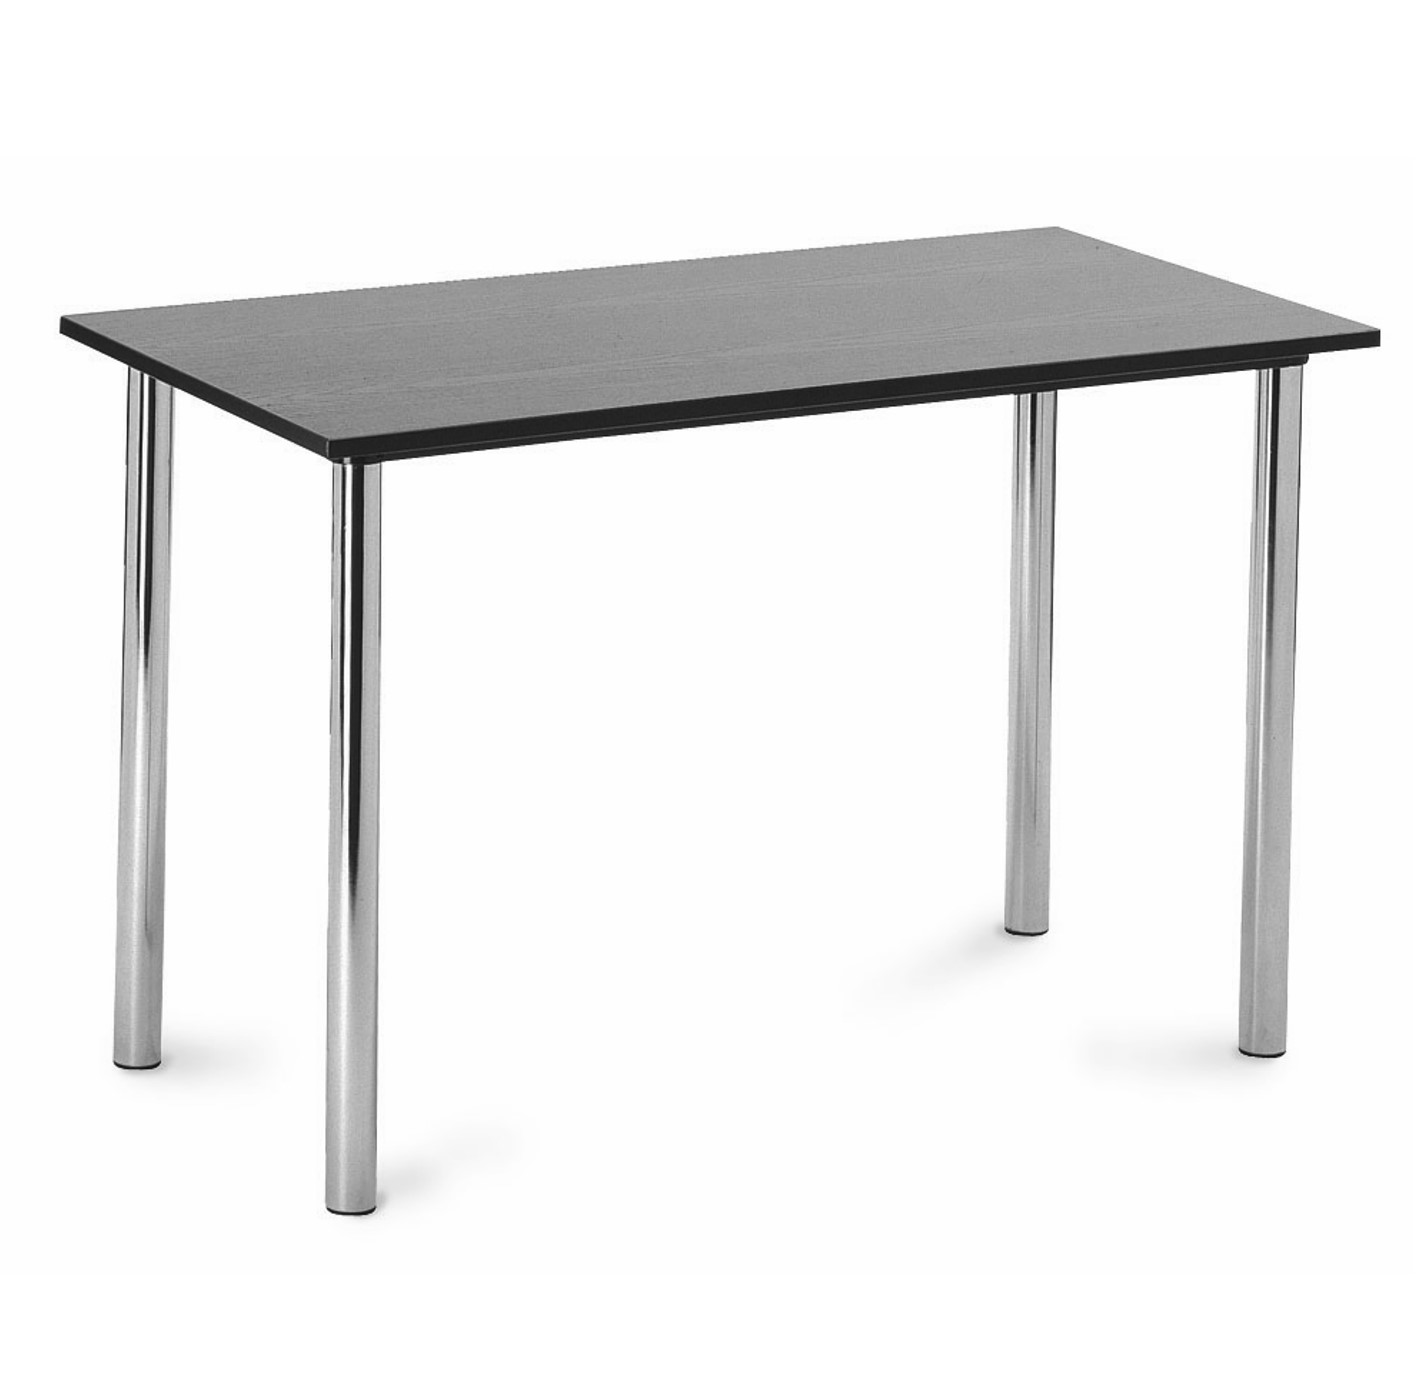 Table oberkampf 70 - 140x80 noire